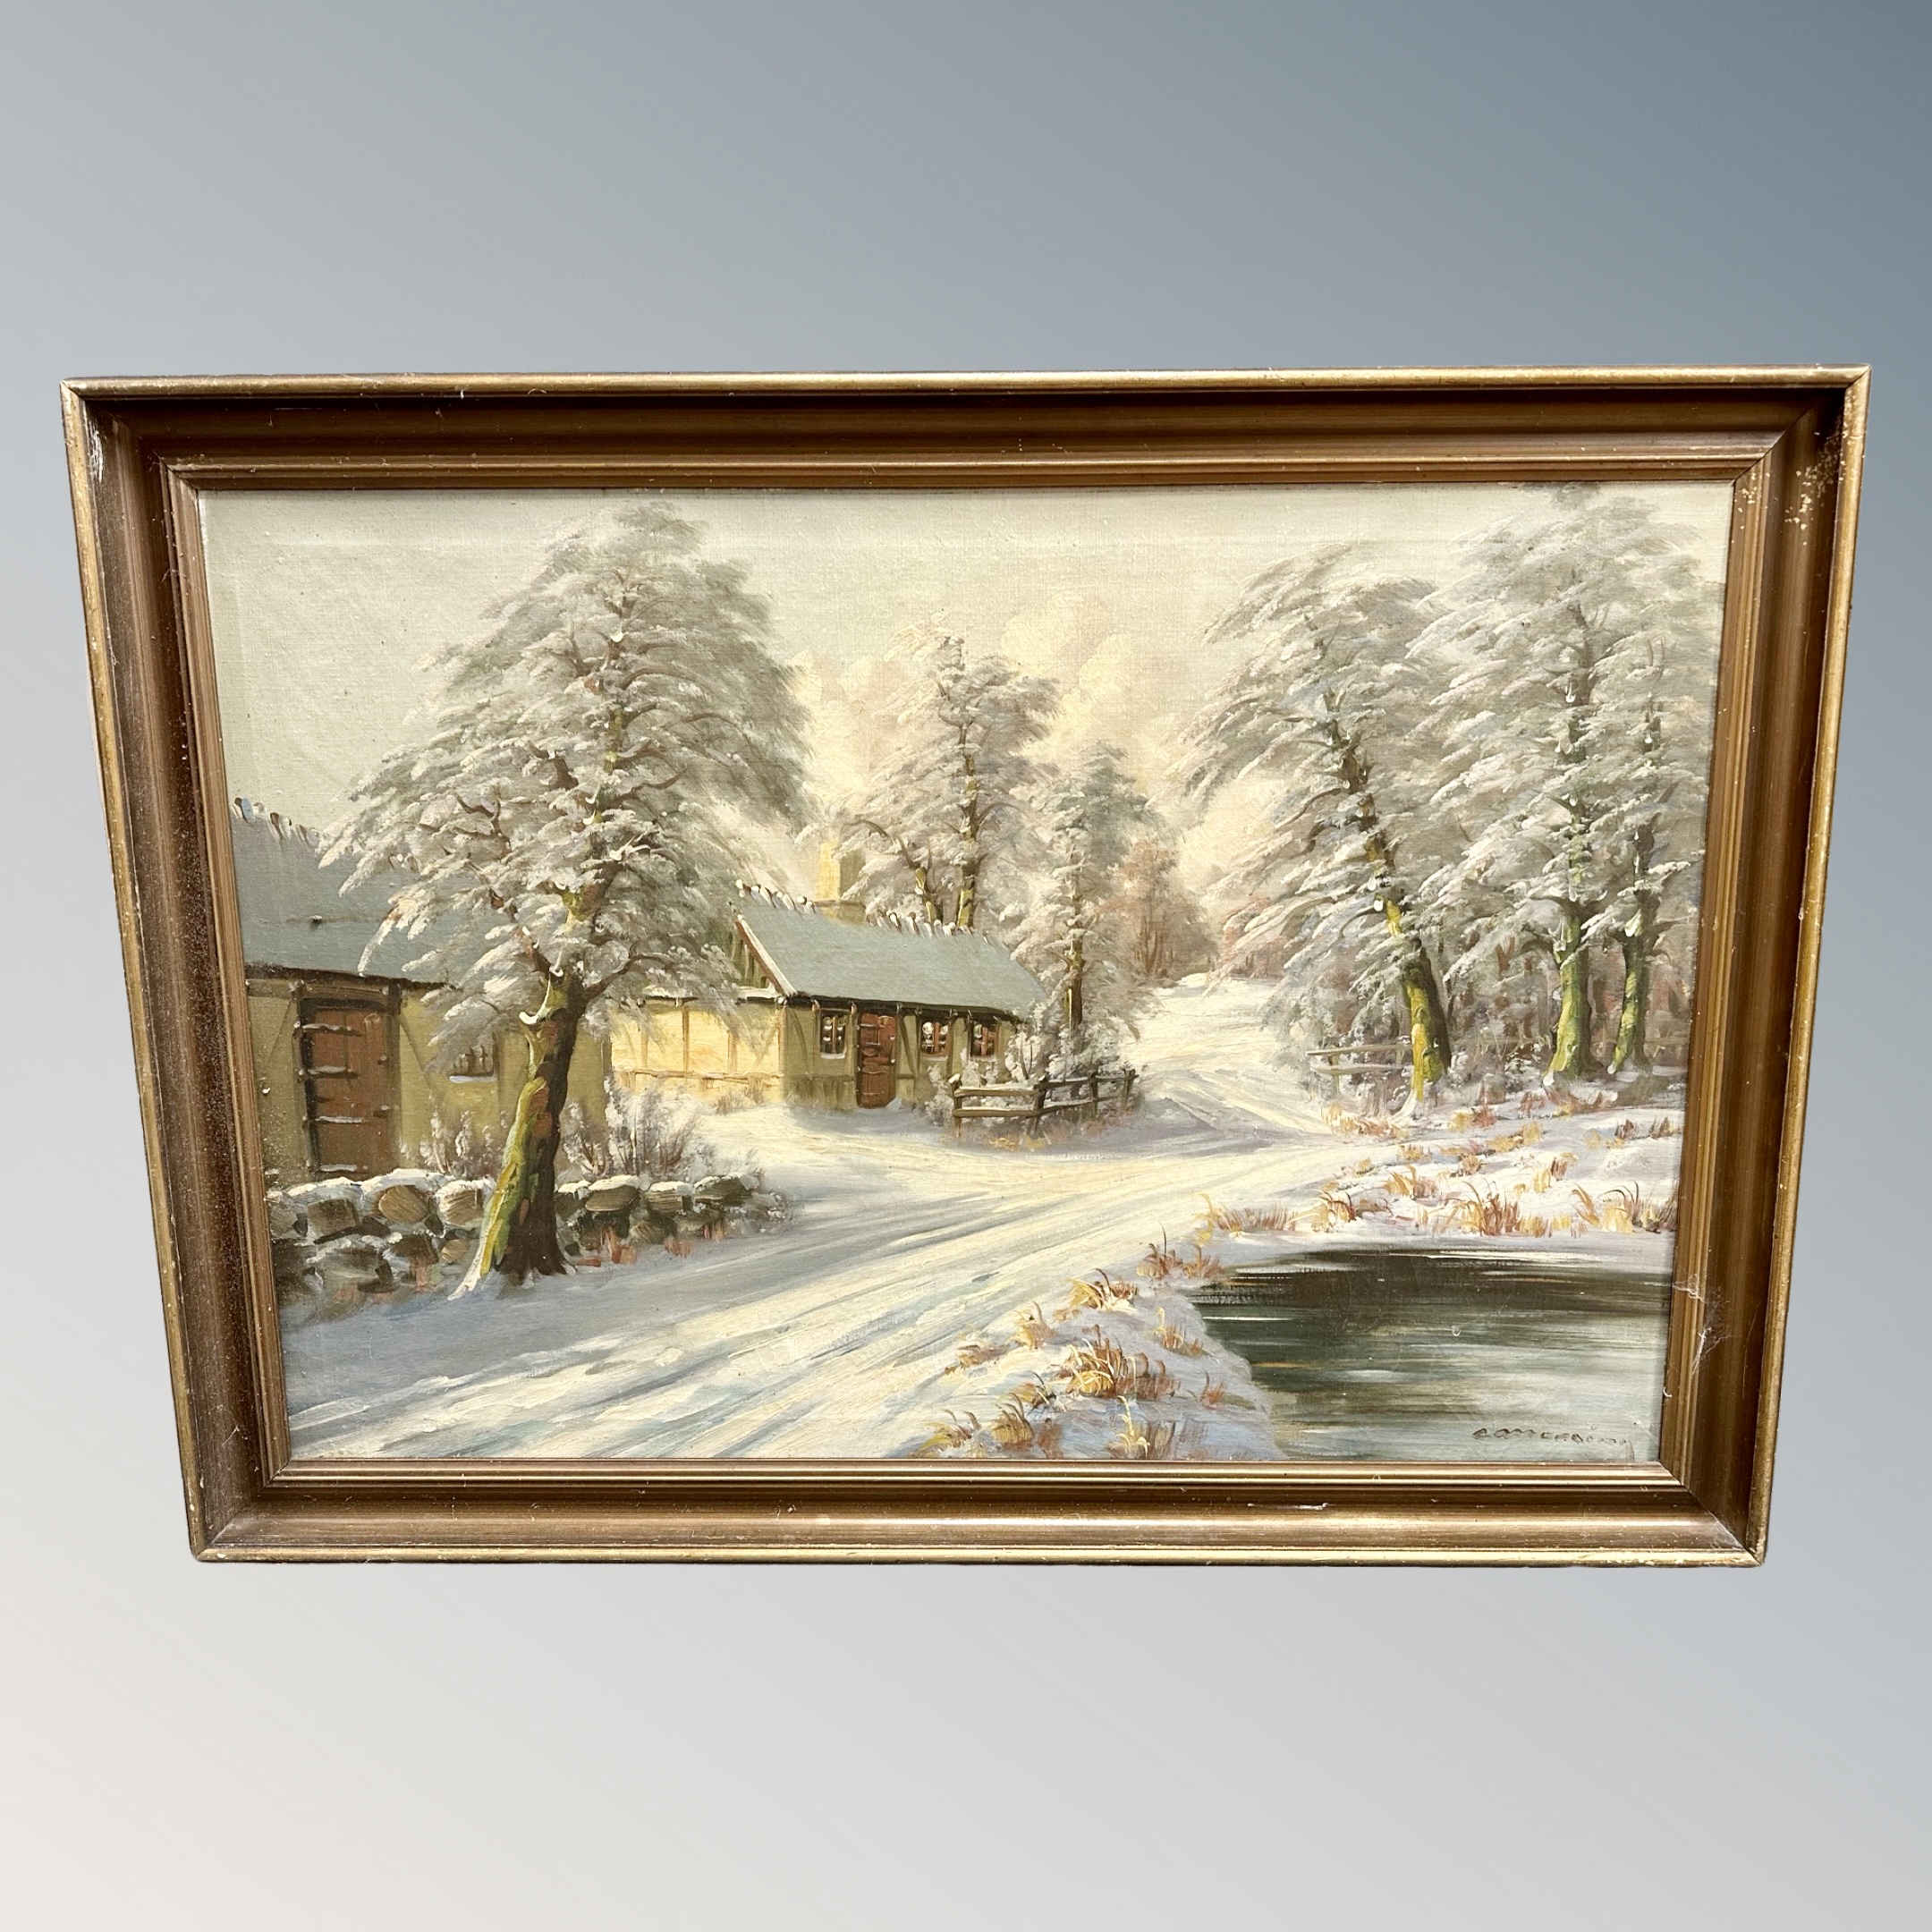 Danish School : Snow on barn near lake, oil on canvas,